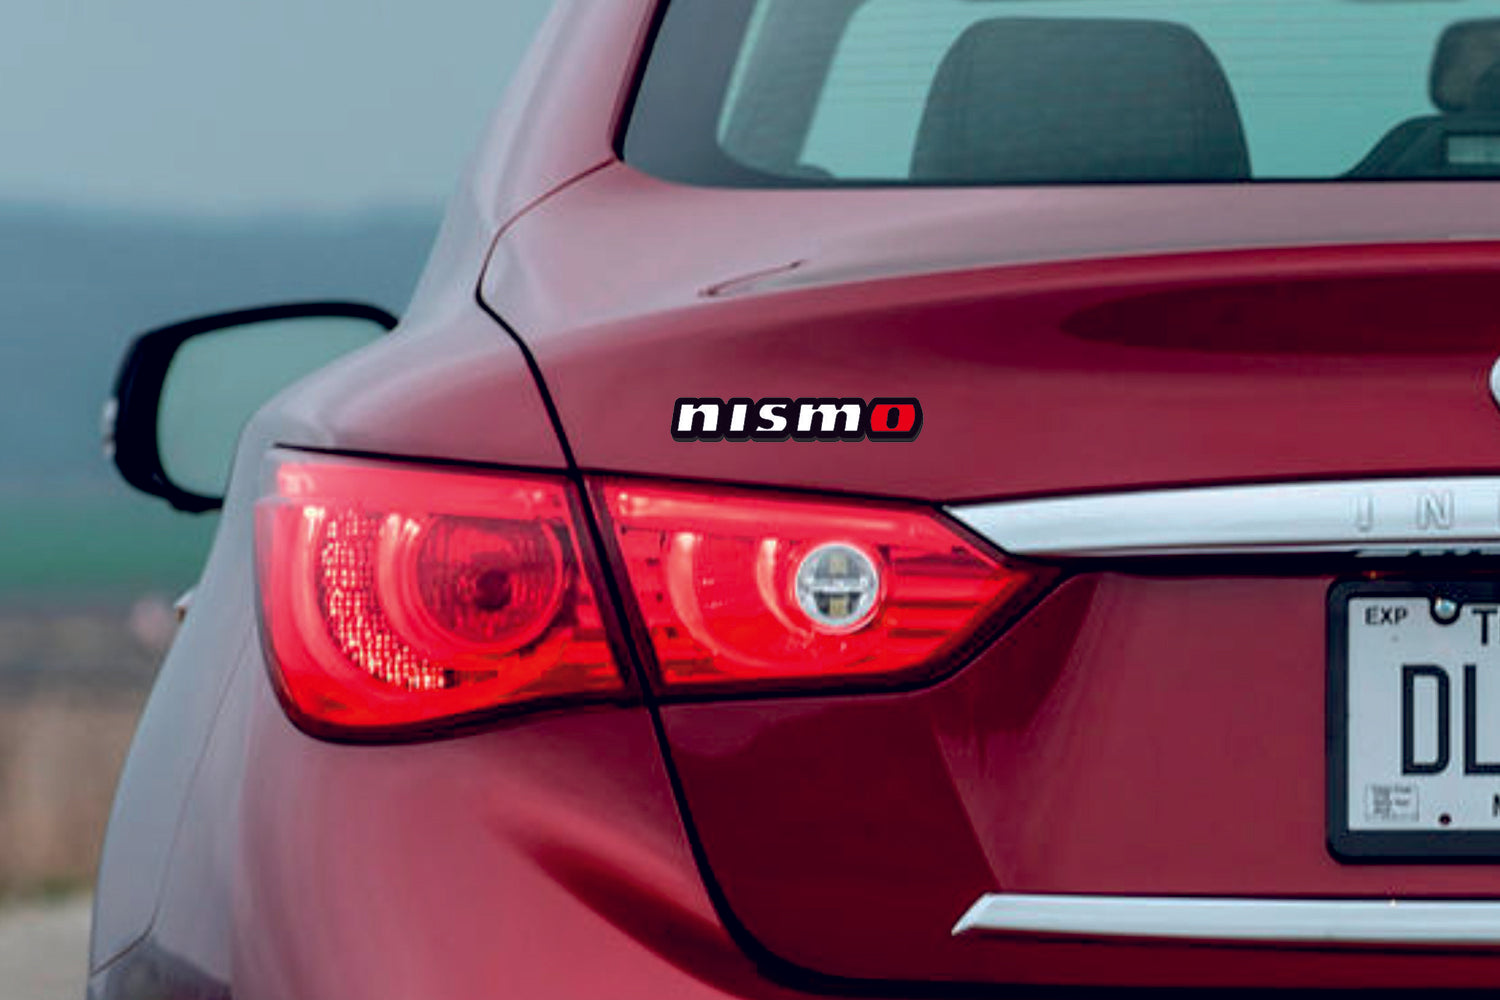 Infiniti tailgate trunk rear emblem with Nismo logo - decoinfabric